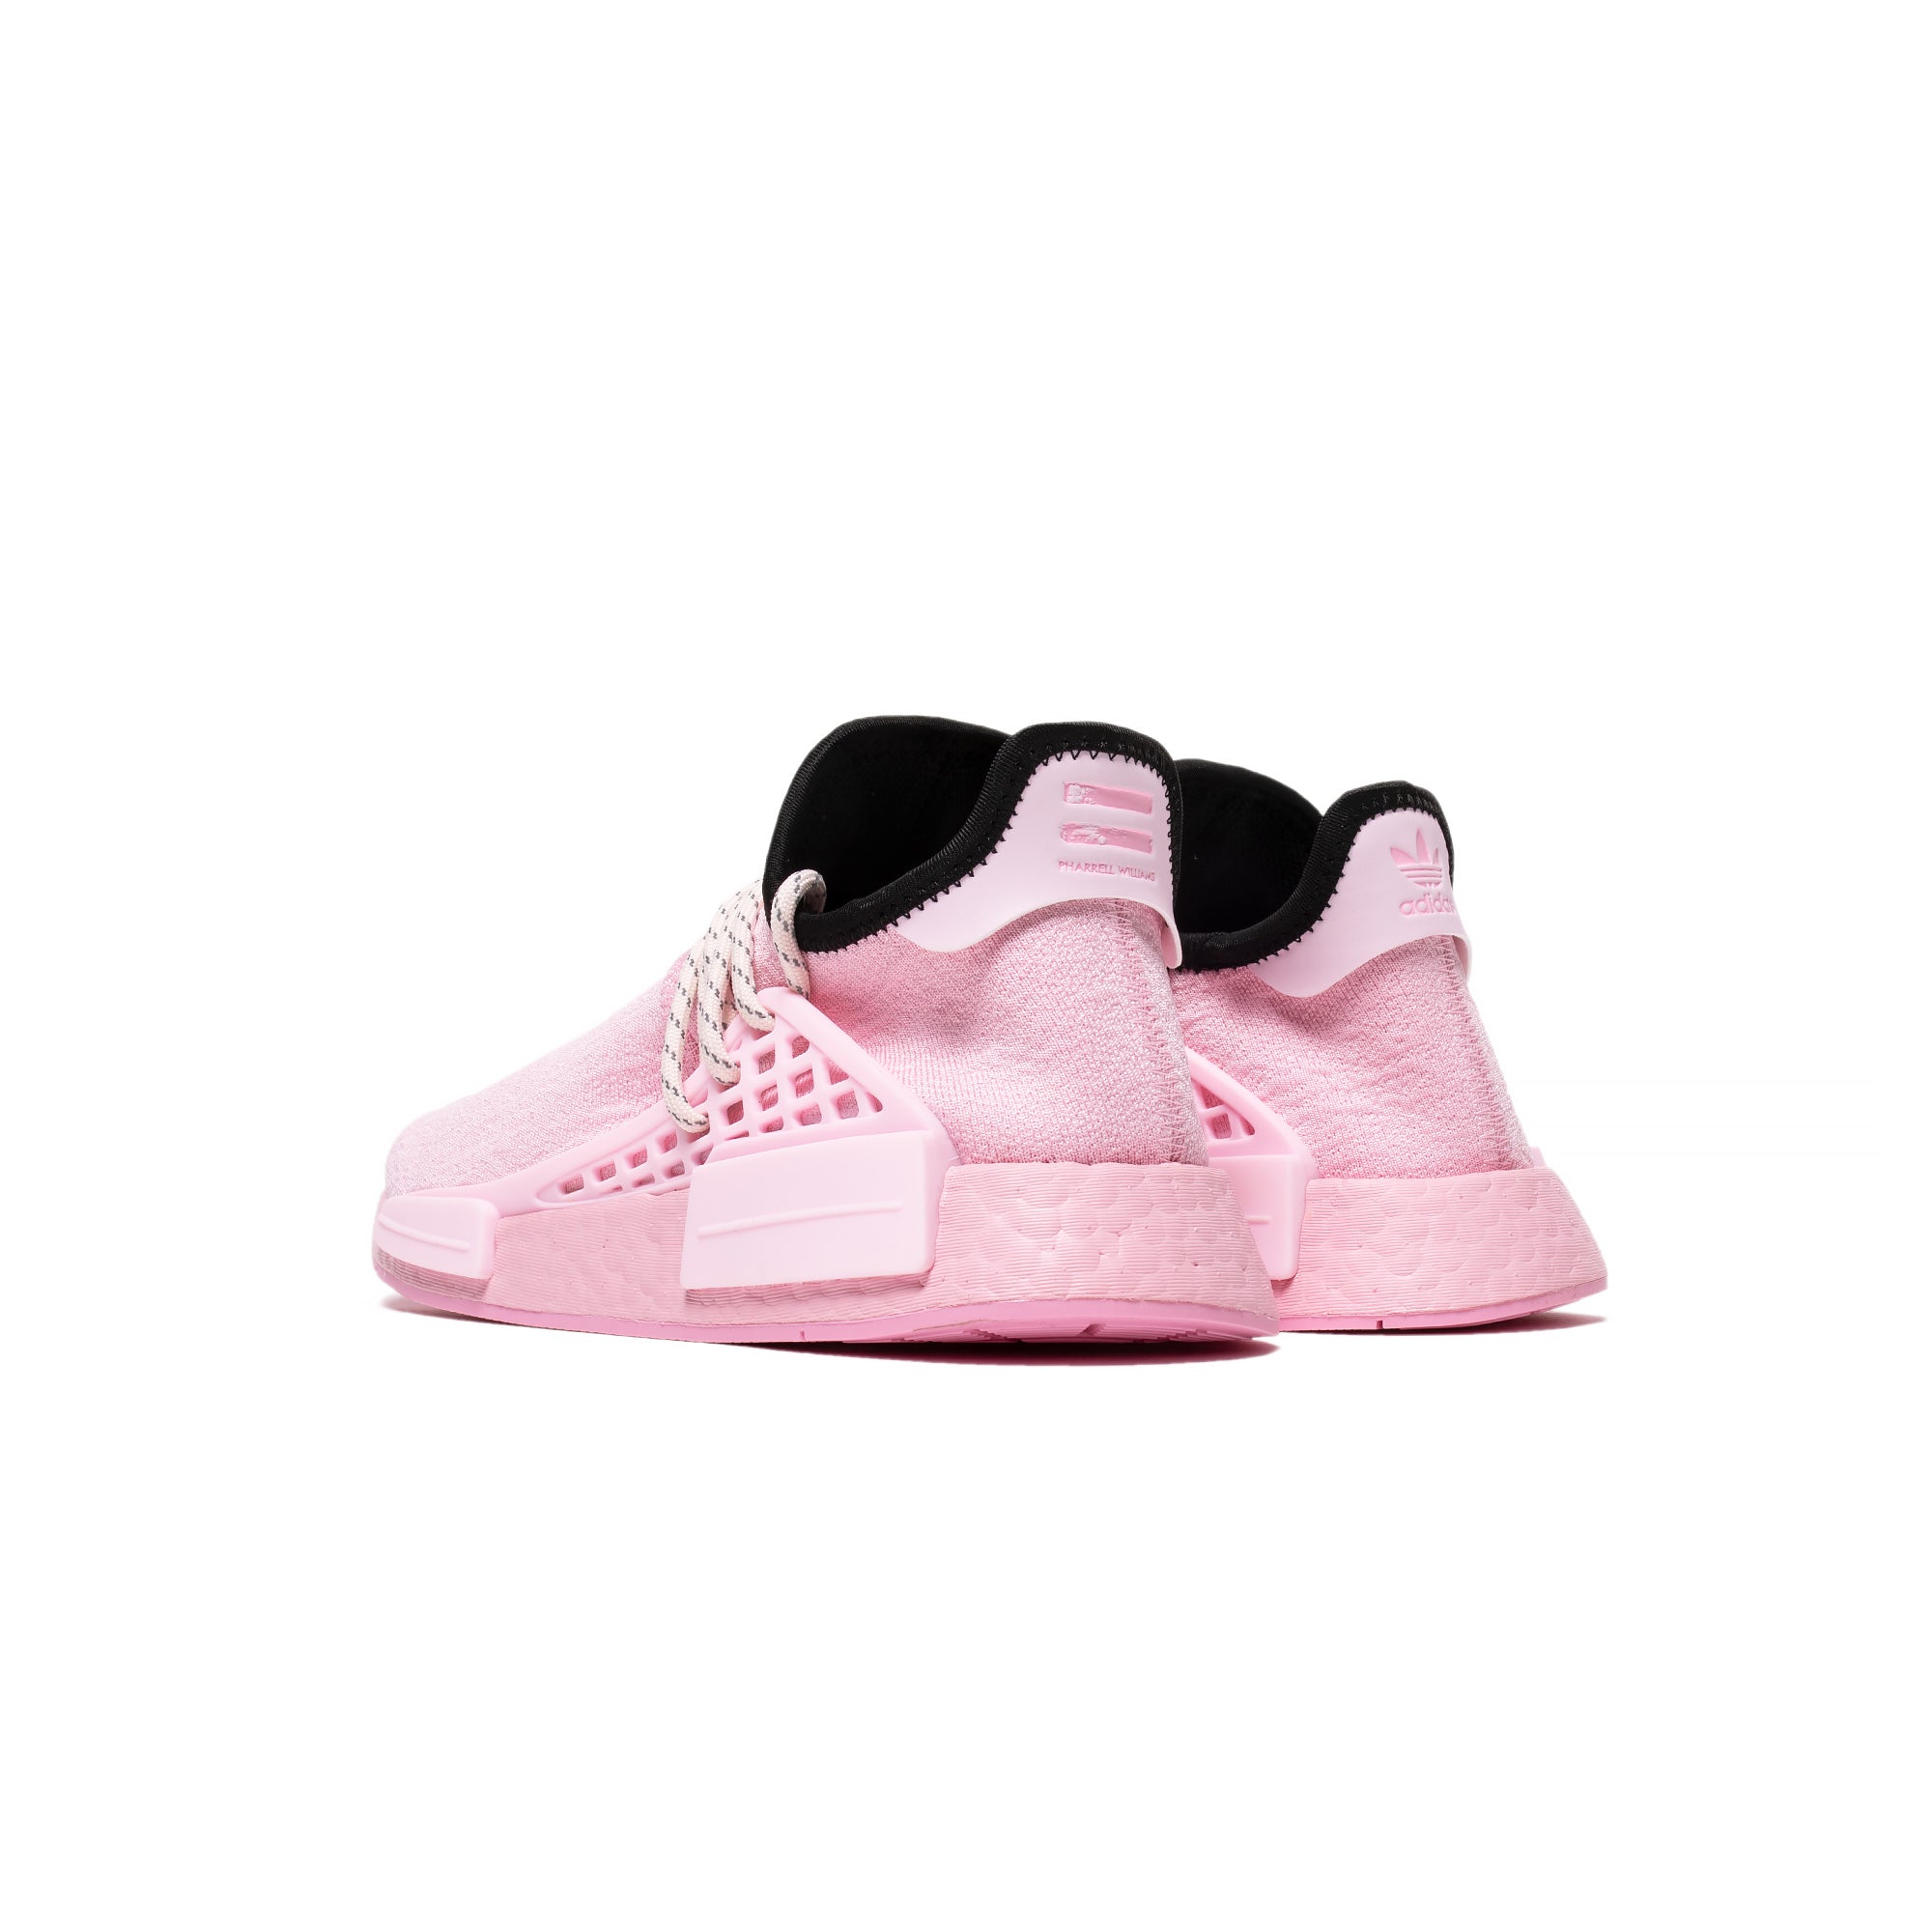 Adidas Pharrell Hu NMD Pink Shoes